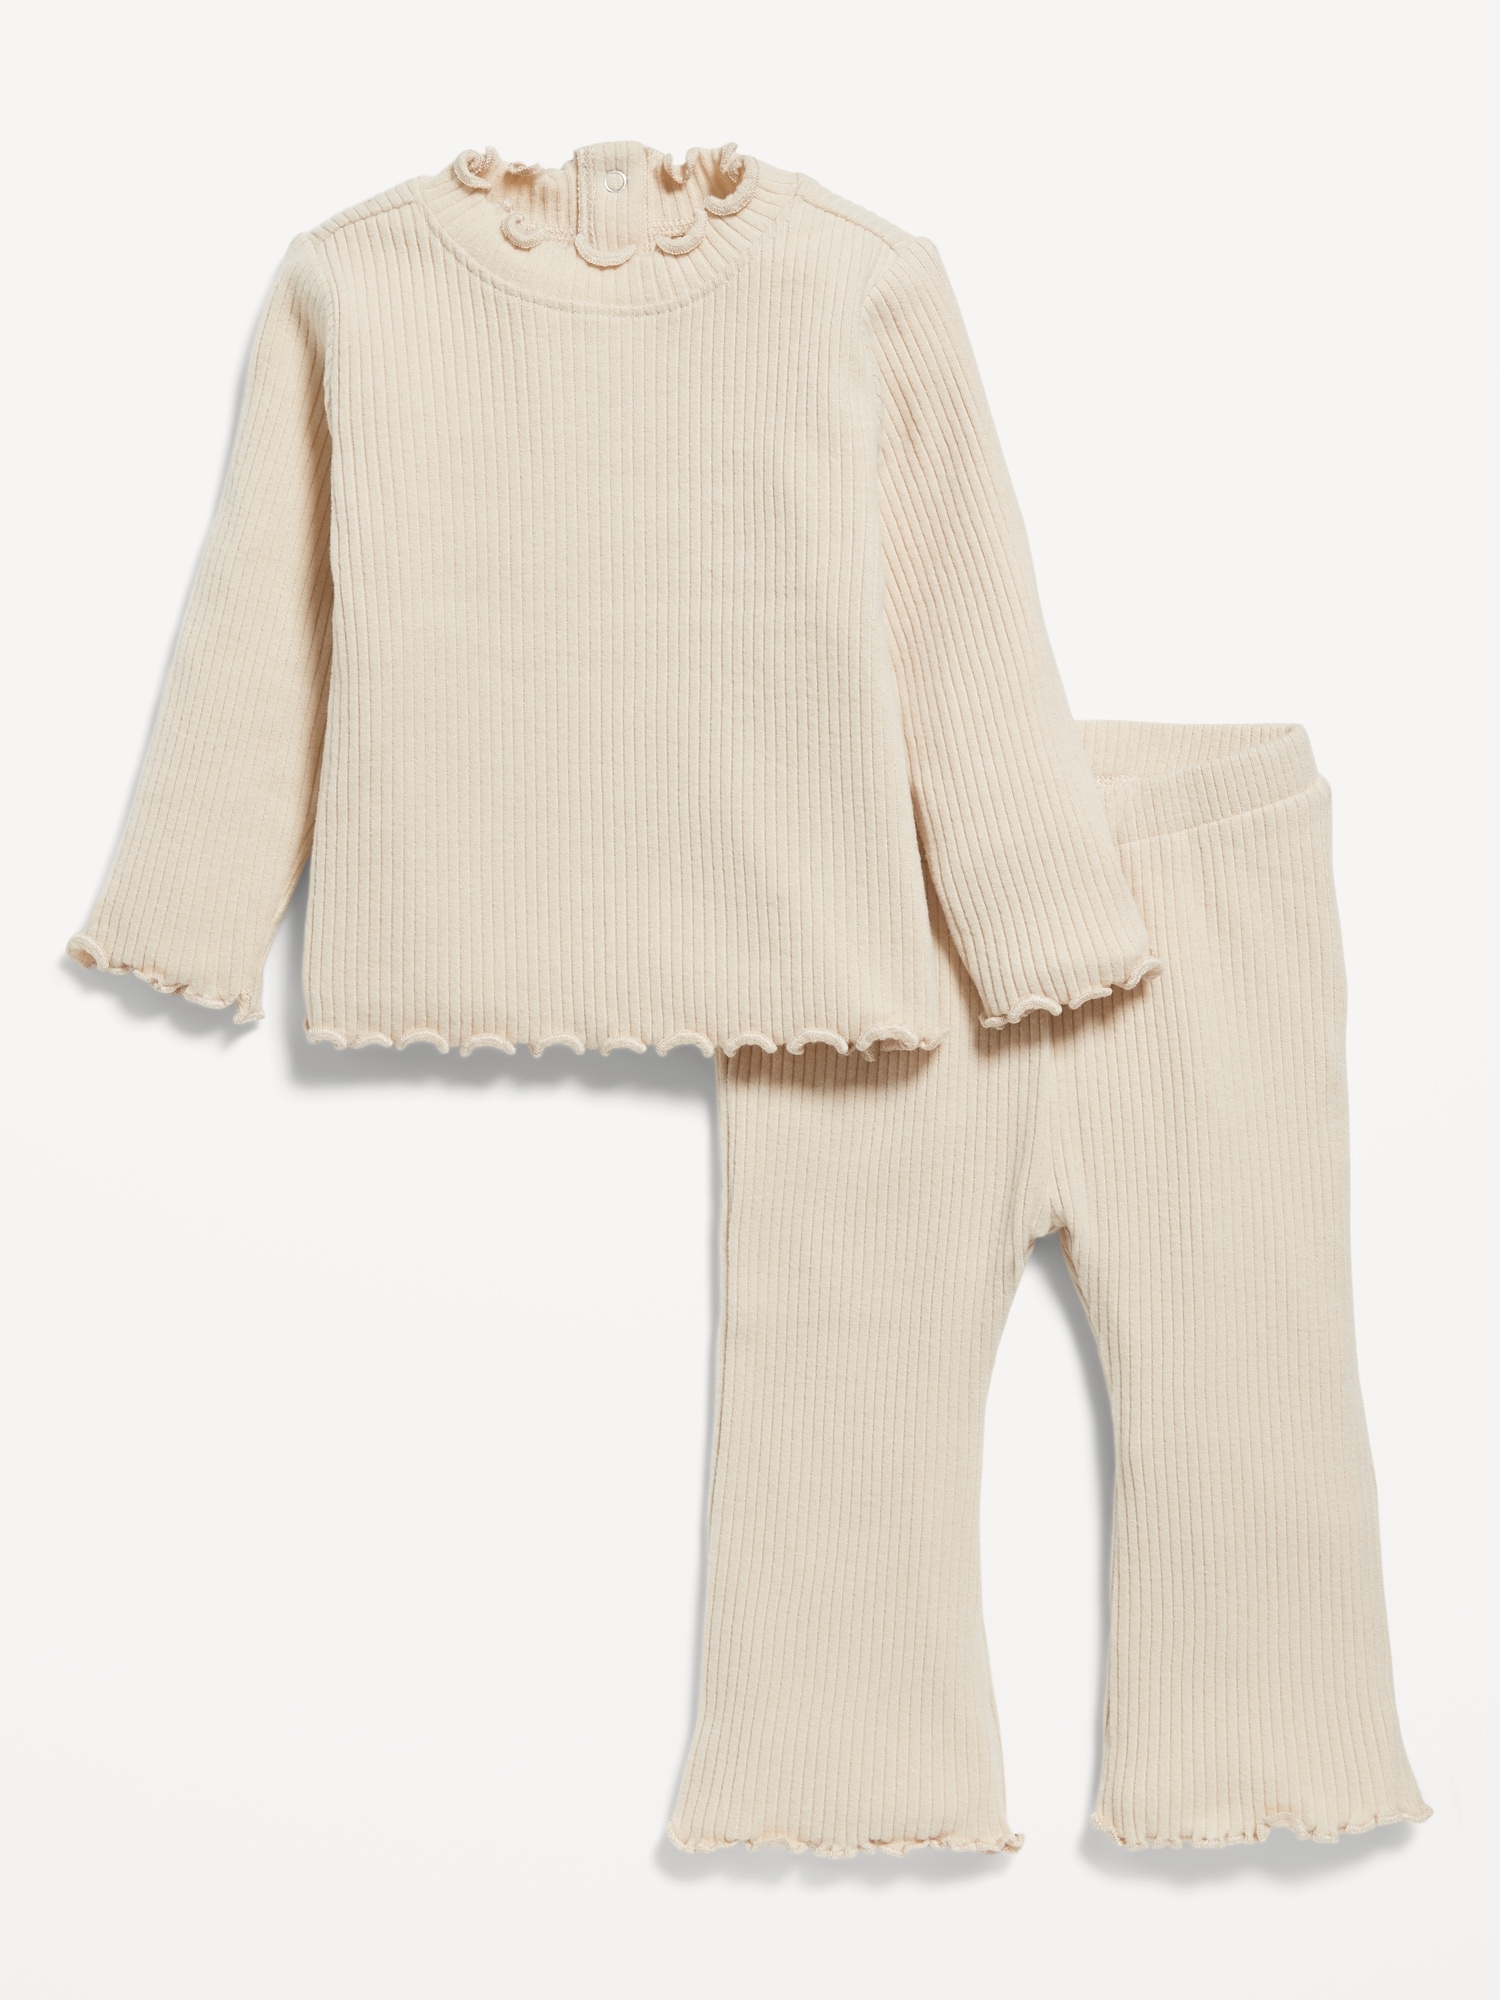 Crochet Pattern Newborn Hat & Baby Pants Set